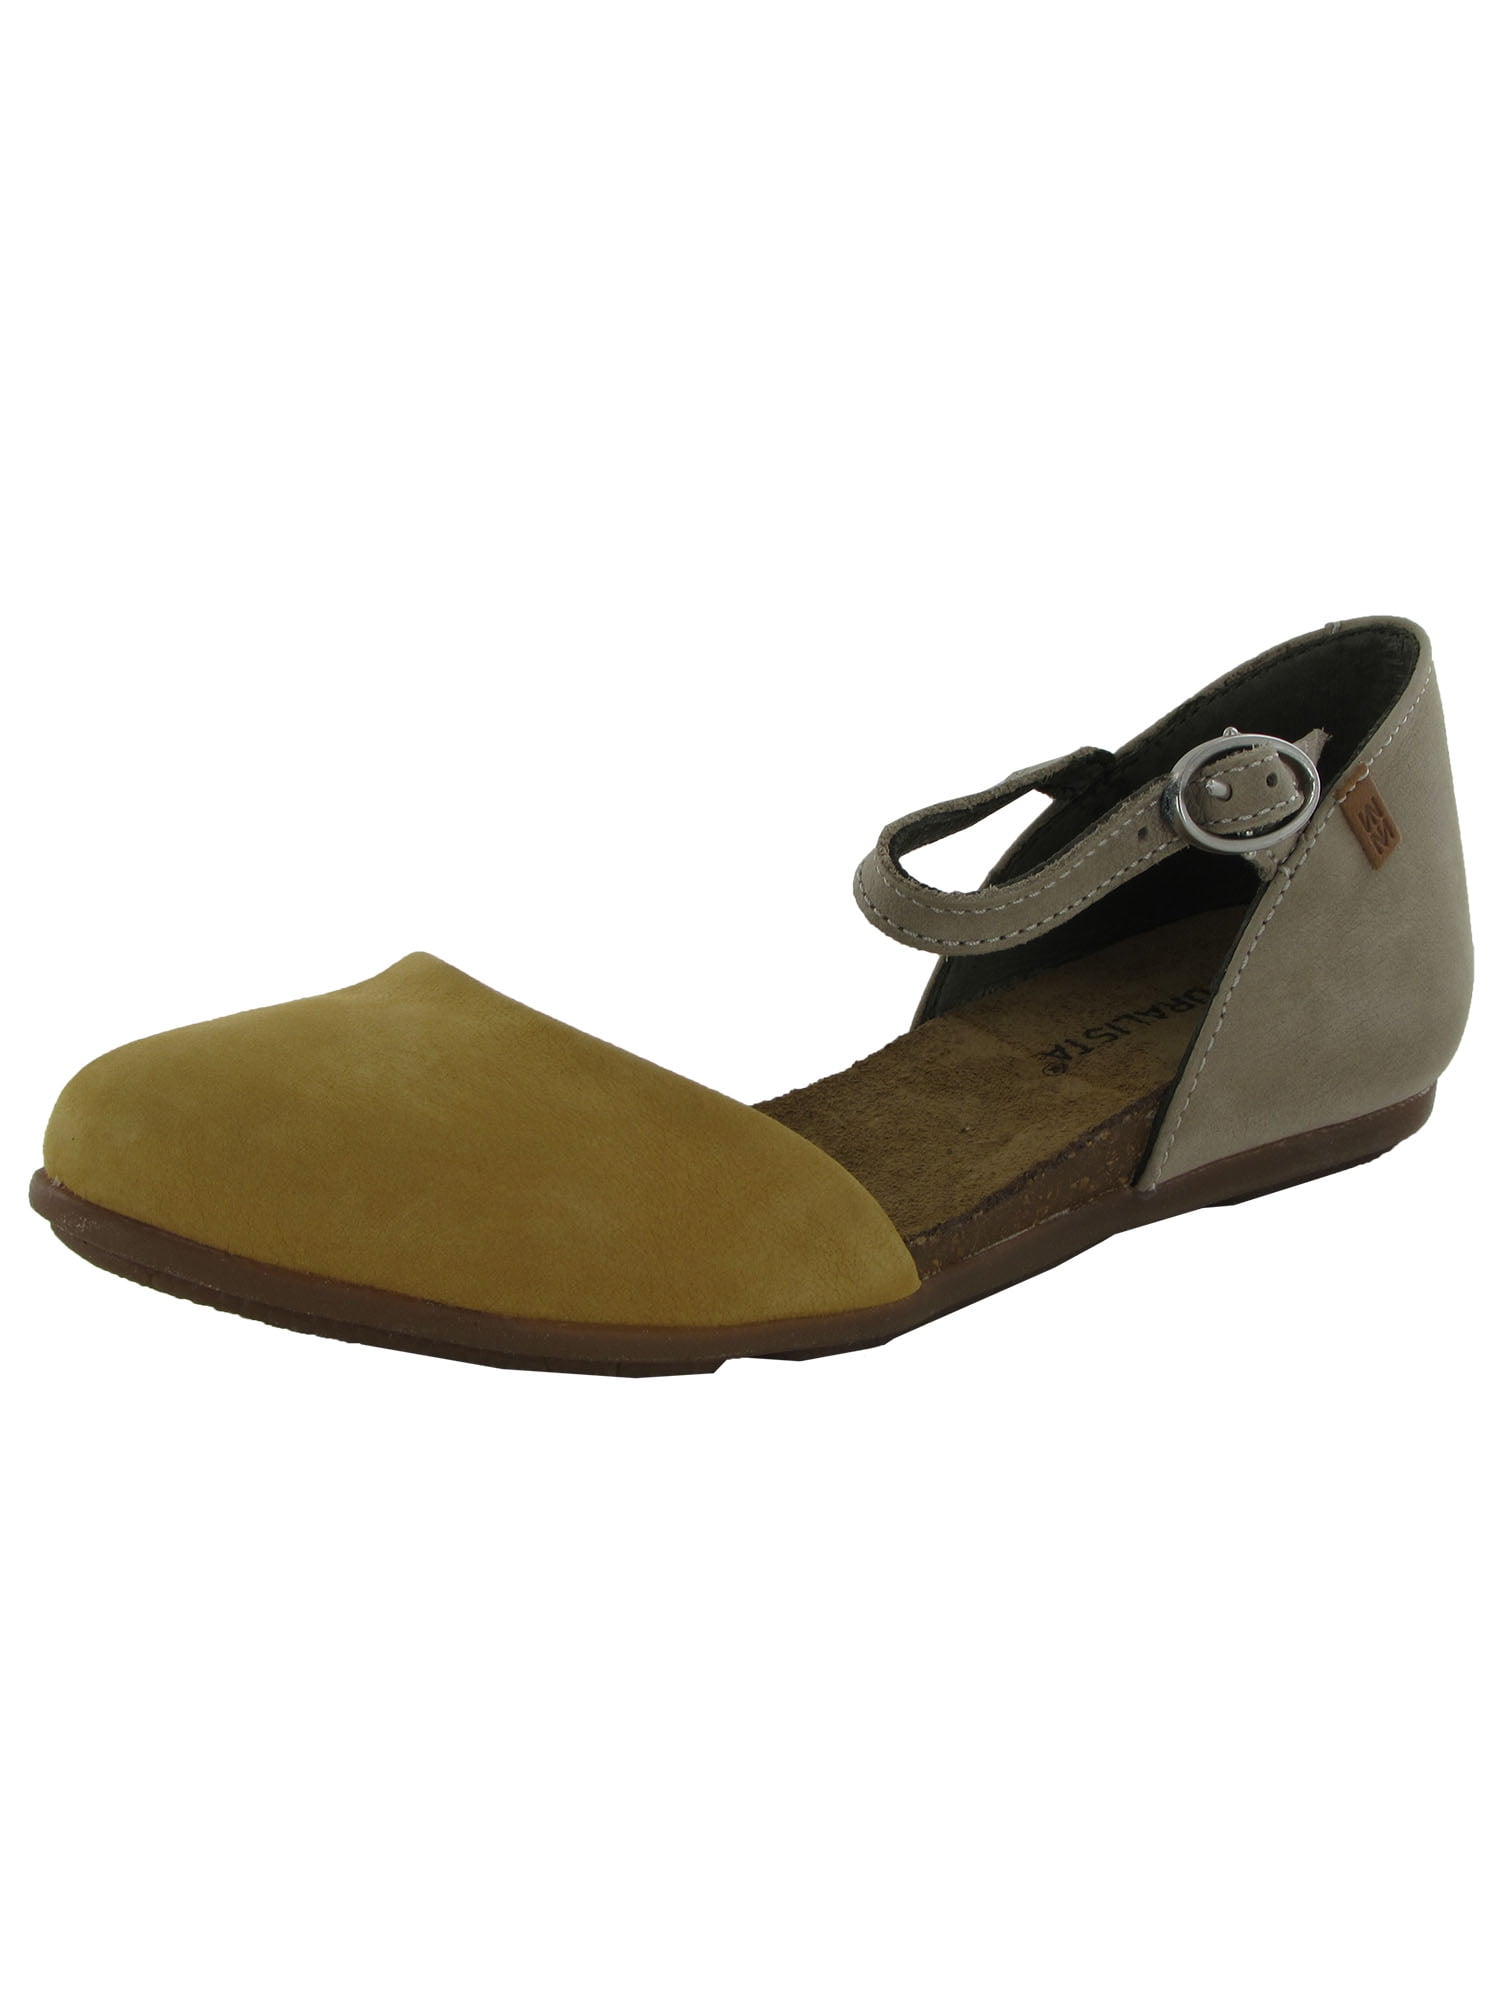 El Naturalista Womens Stella ND54 Sandal Shoes, Piedra/Curry, EU 37 / US 7